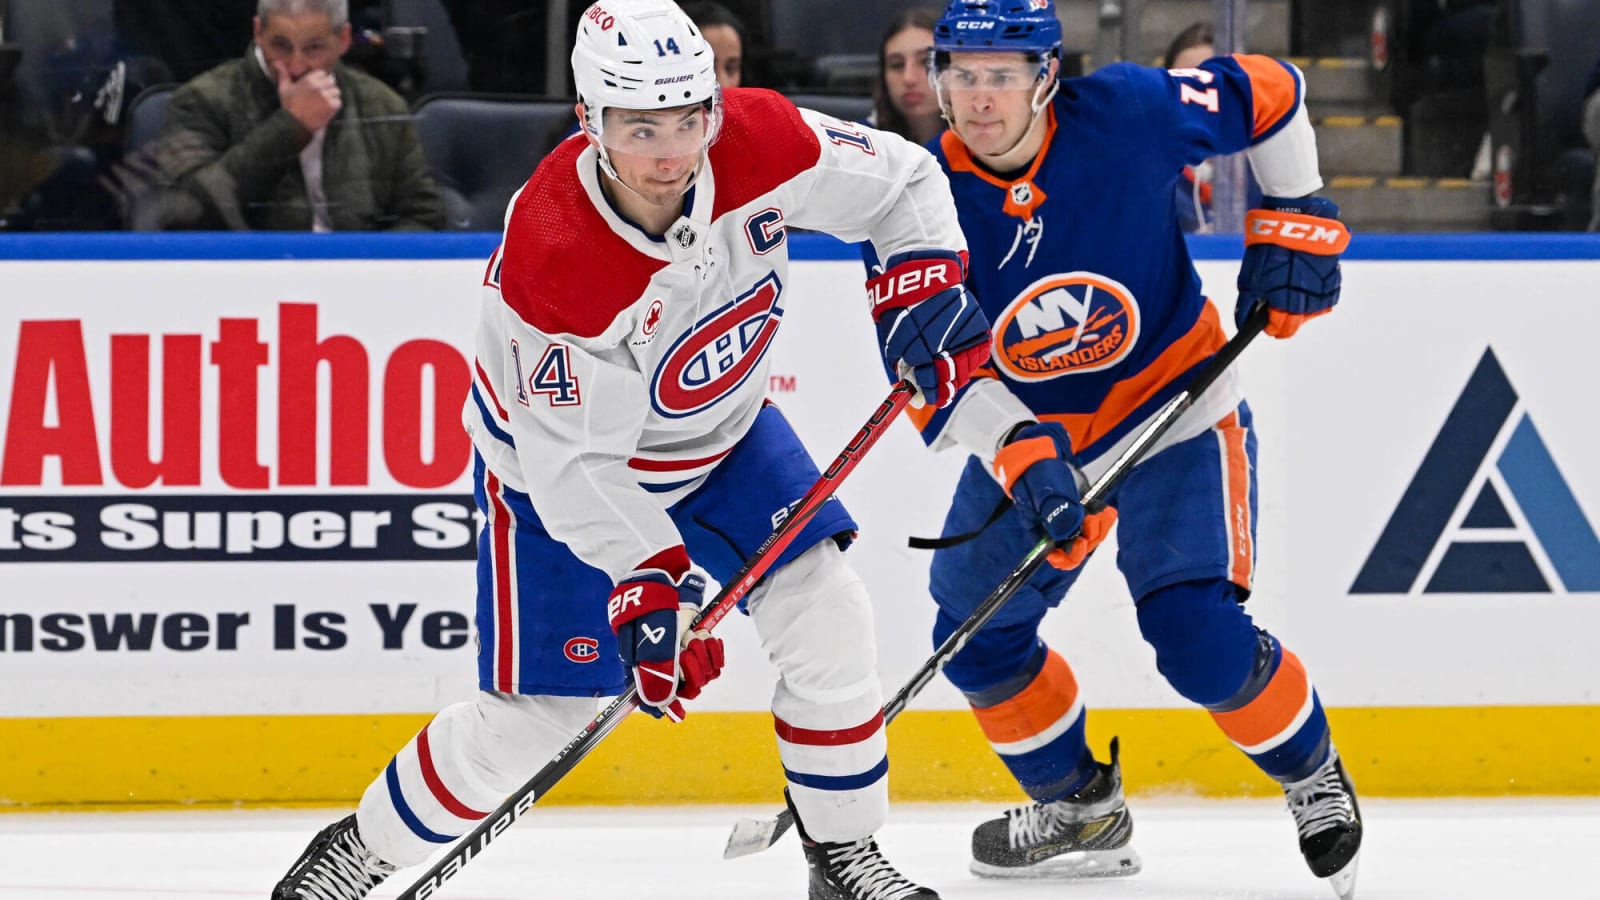 Canadiens Facts: Suzuki’s Dedication To Hockey Beyond Reproach